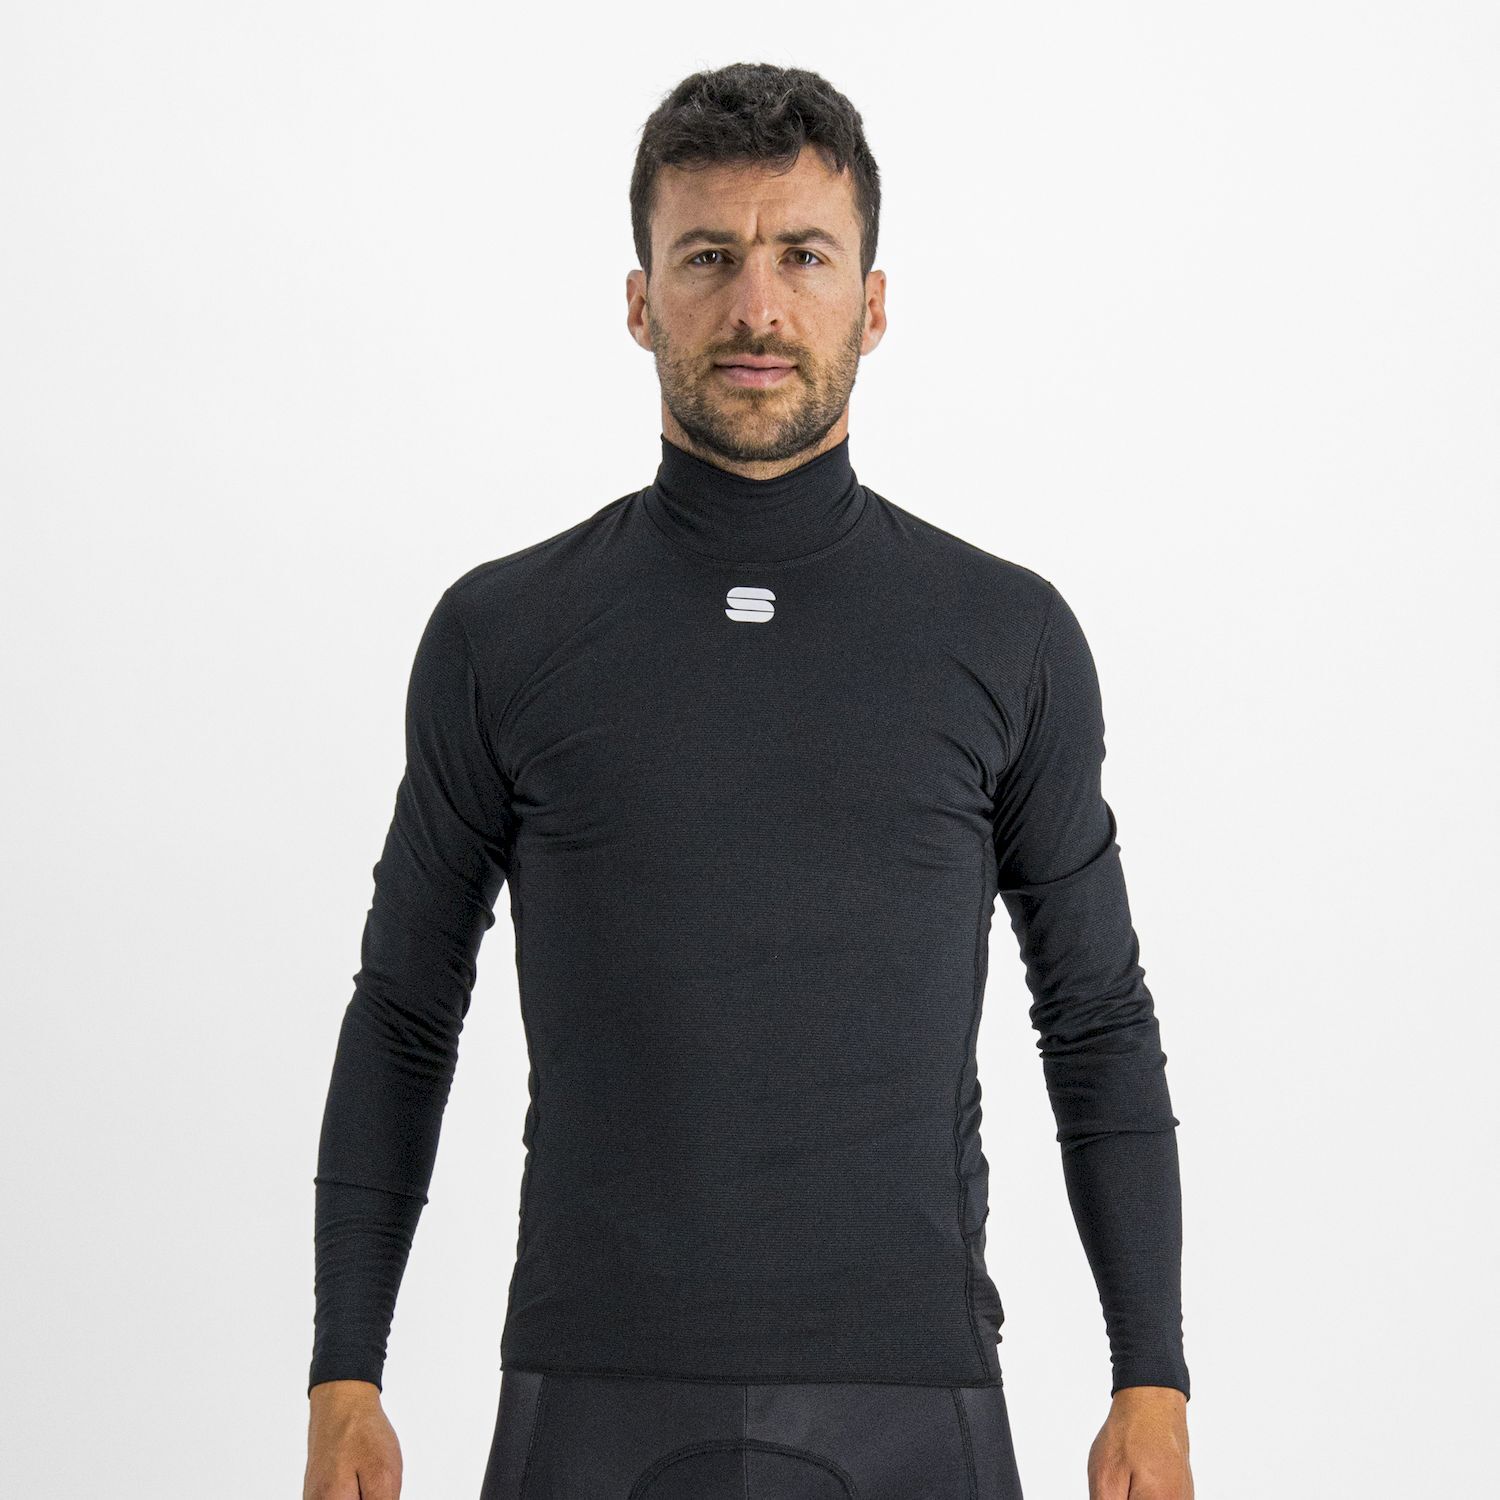 Sportful Sottozero Baselayer Jersey Long Sleeves - Base layer - Men's